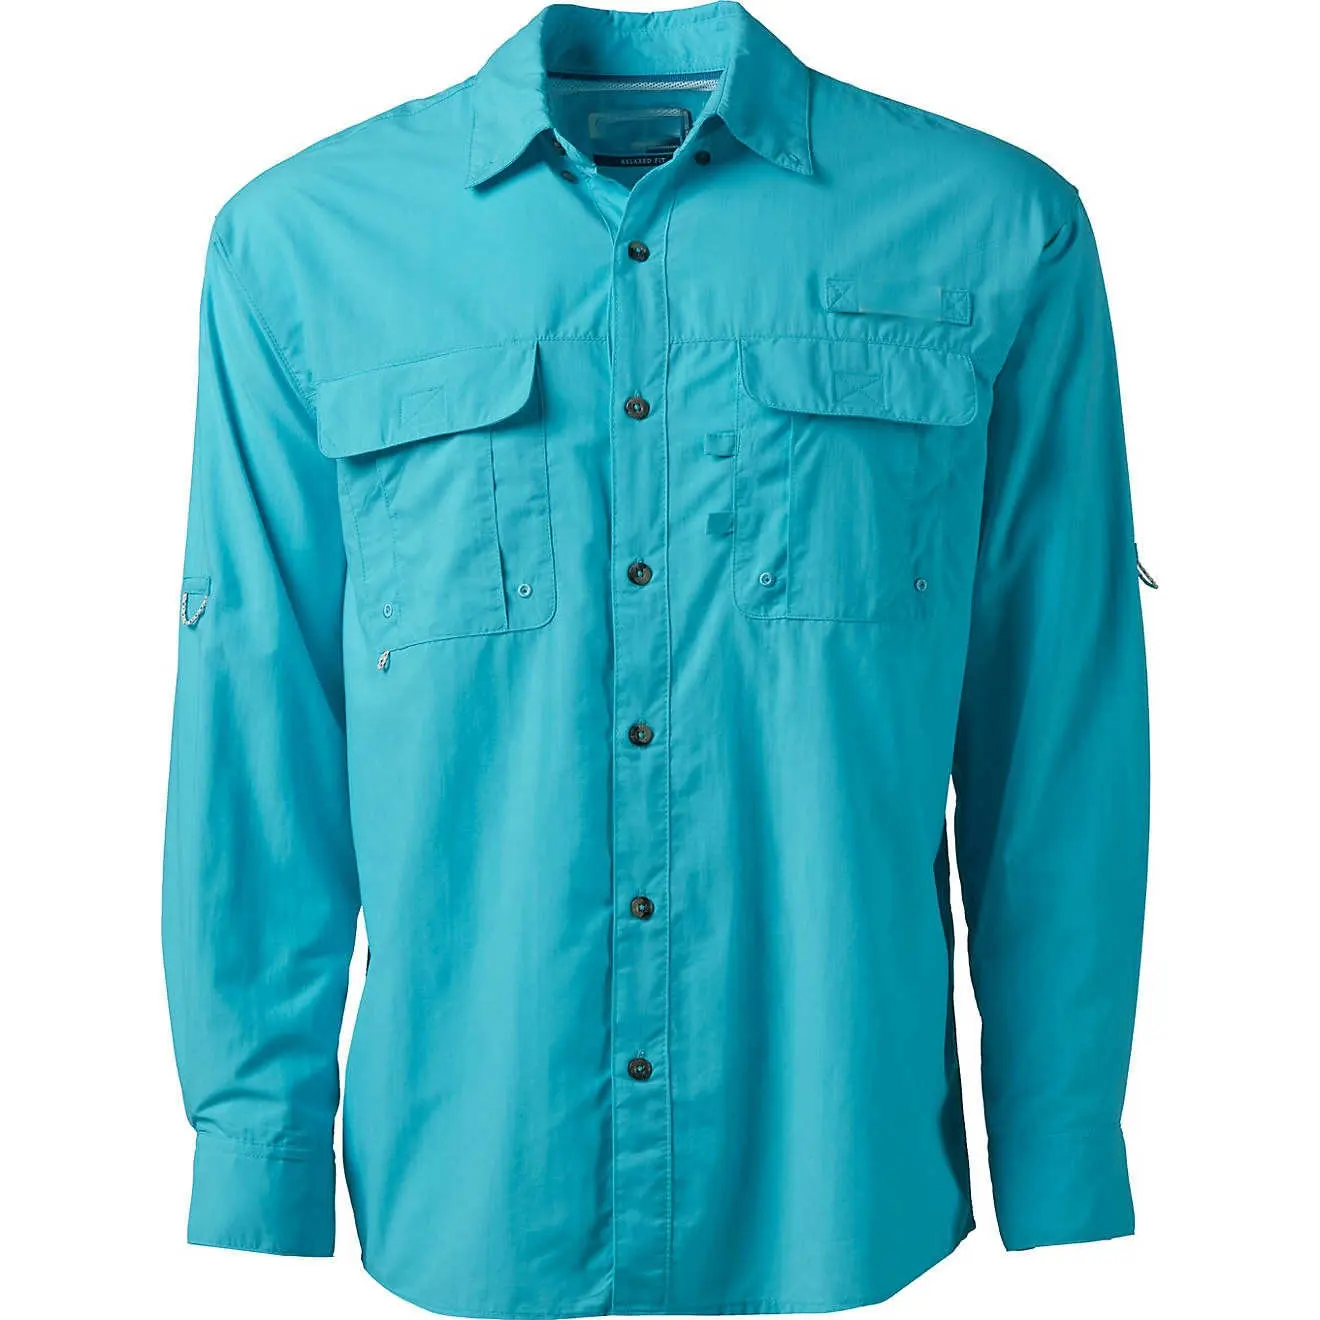 Hot sale best royal blue fishing shirt uv protection upf 50 short sleeve fishing shirts custom made